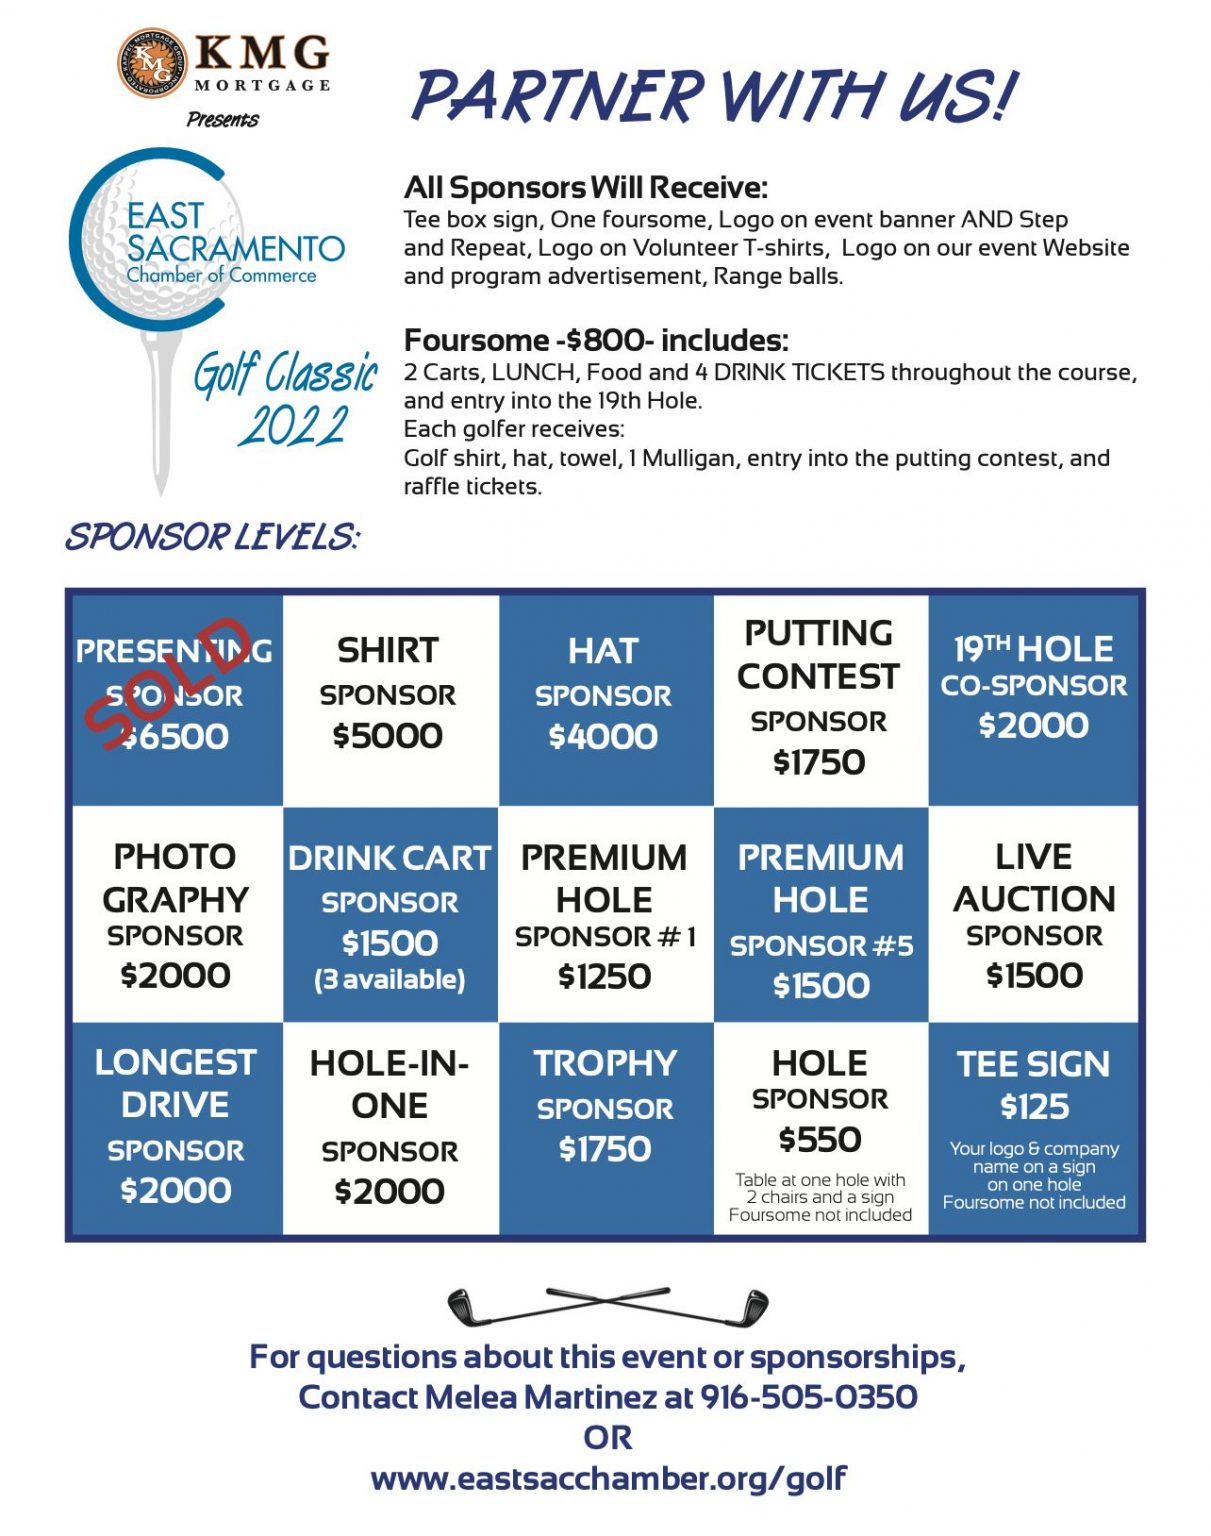 2022 Golf Classic - East Sacramento Chamber of Commerce